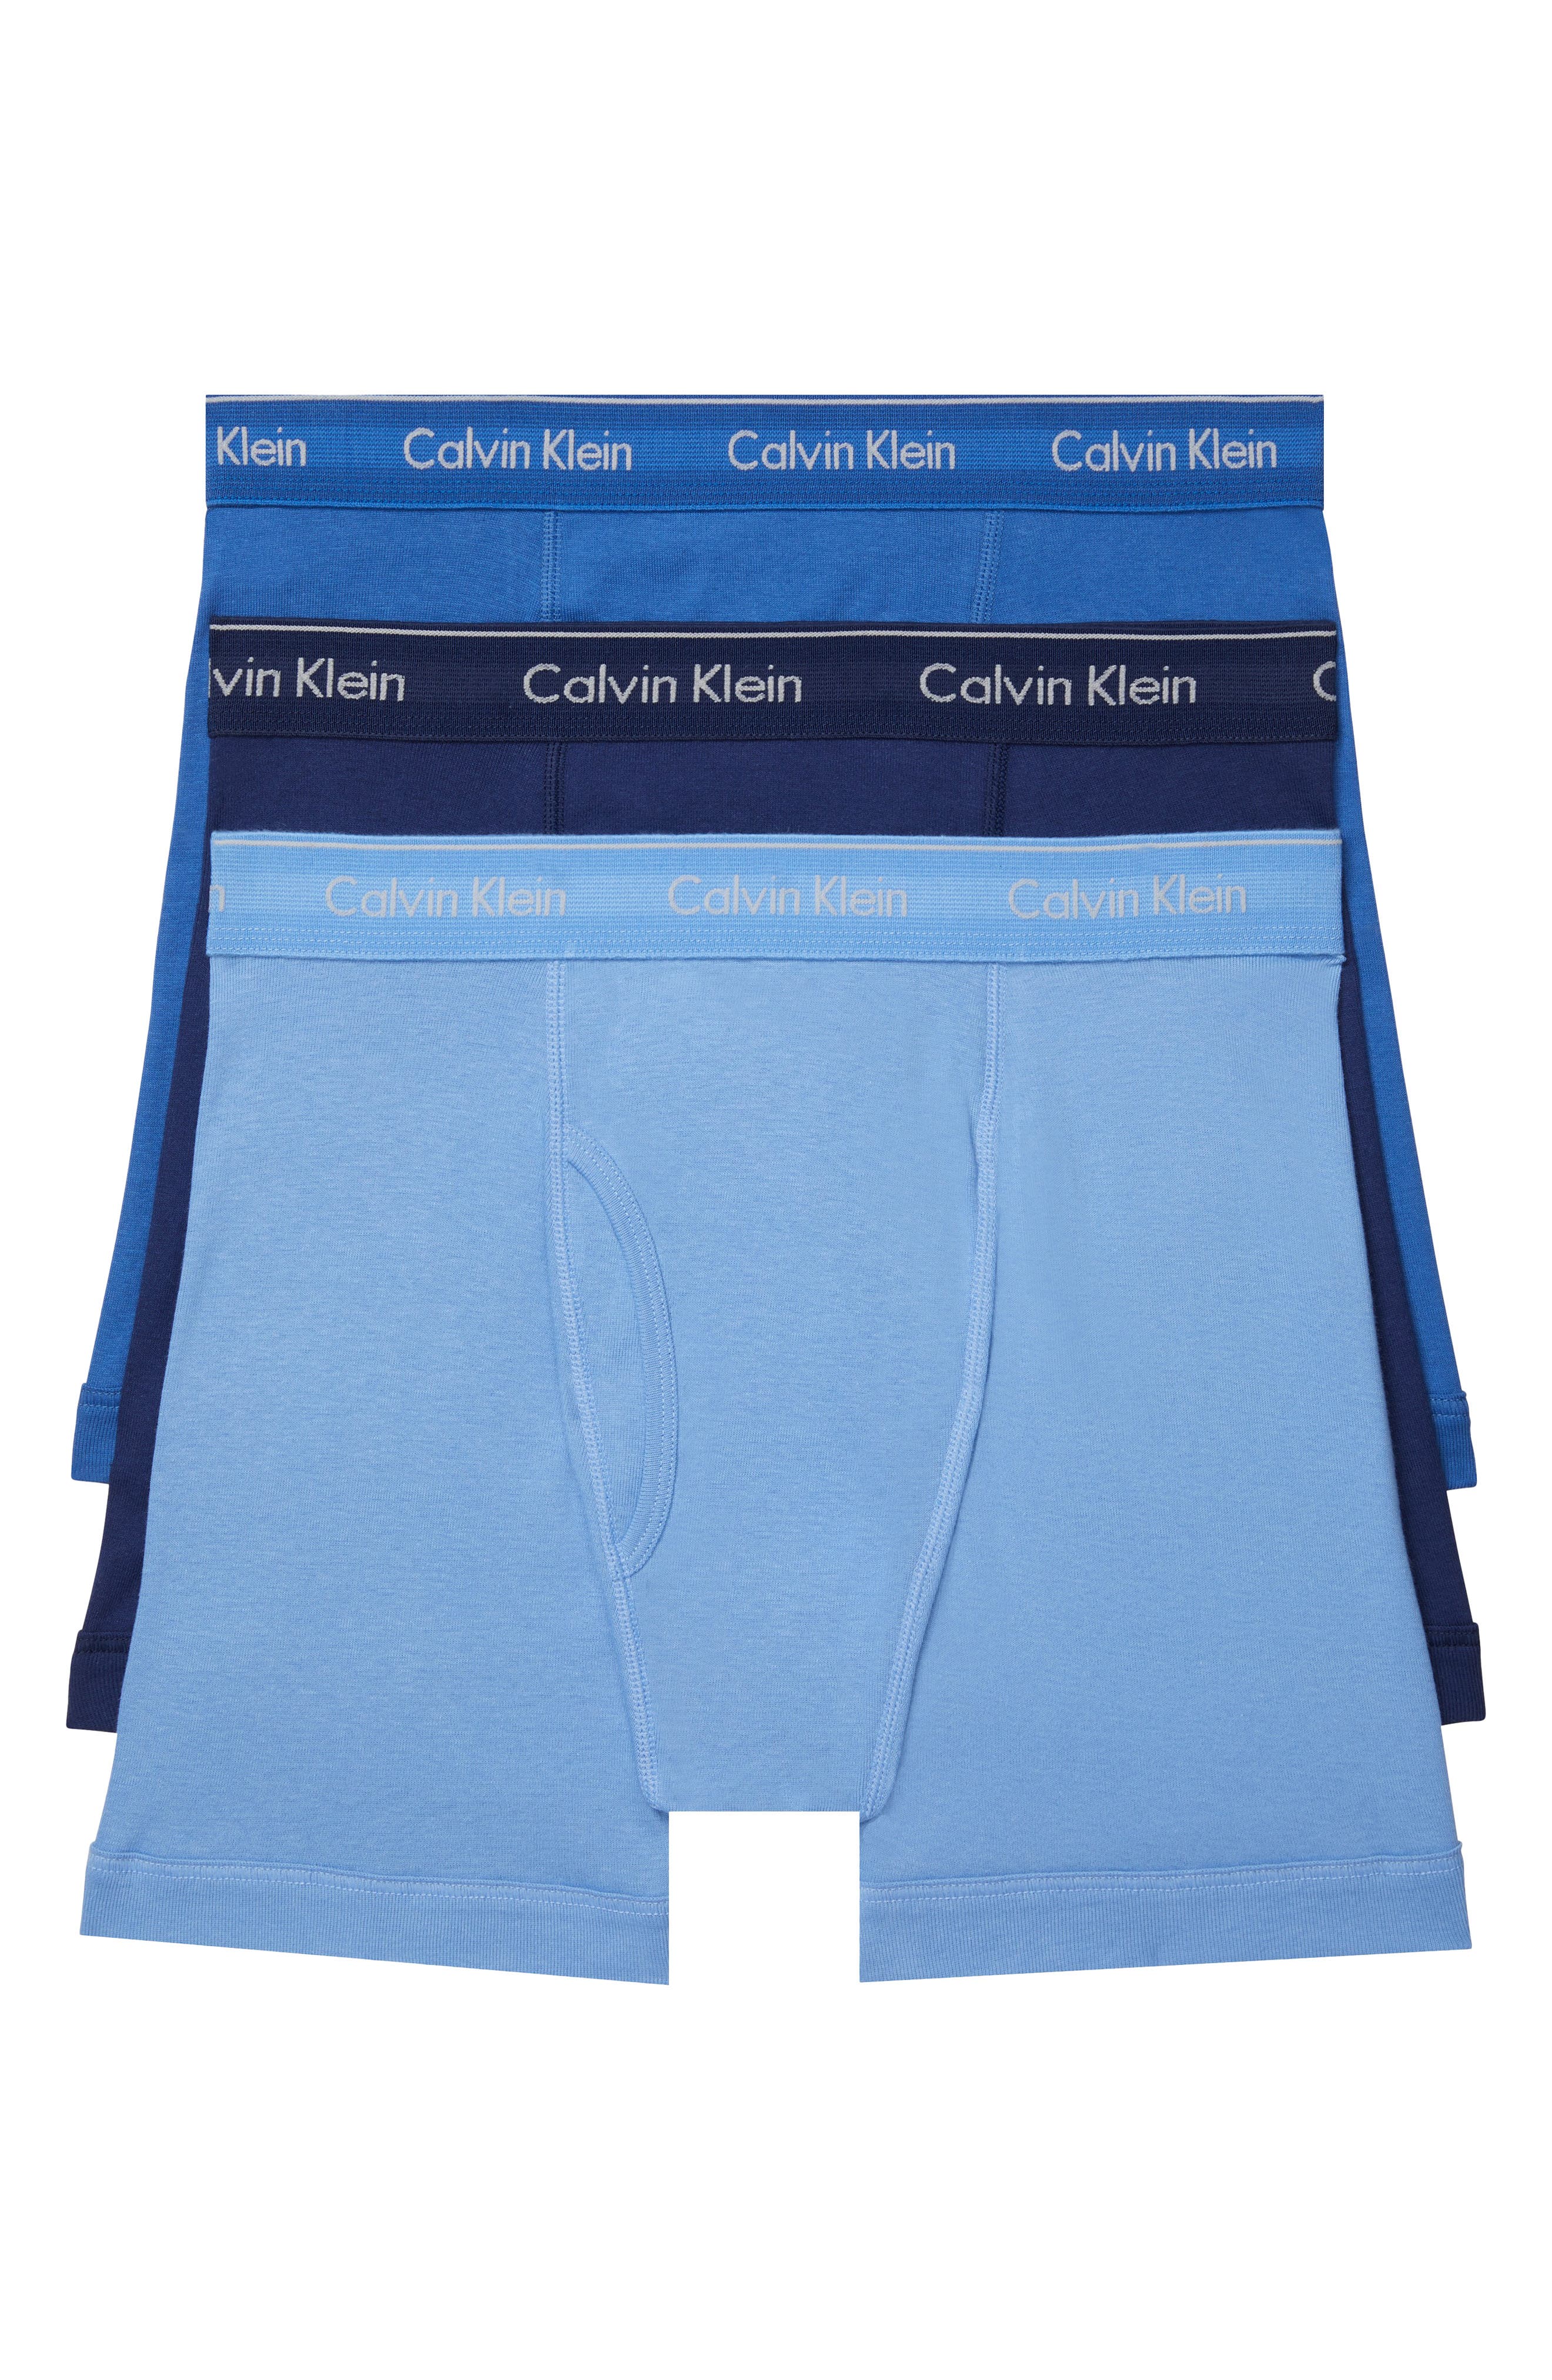 Calvin Klein Cotton 3 Pack Trunks in Blue for Men Mens Clothing Underwear Boxers 